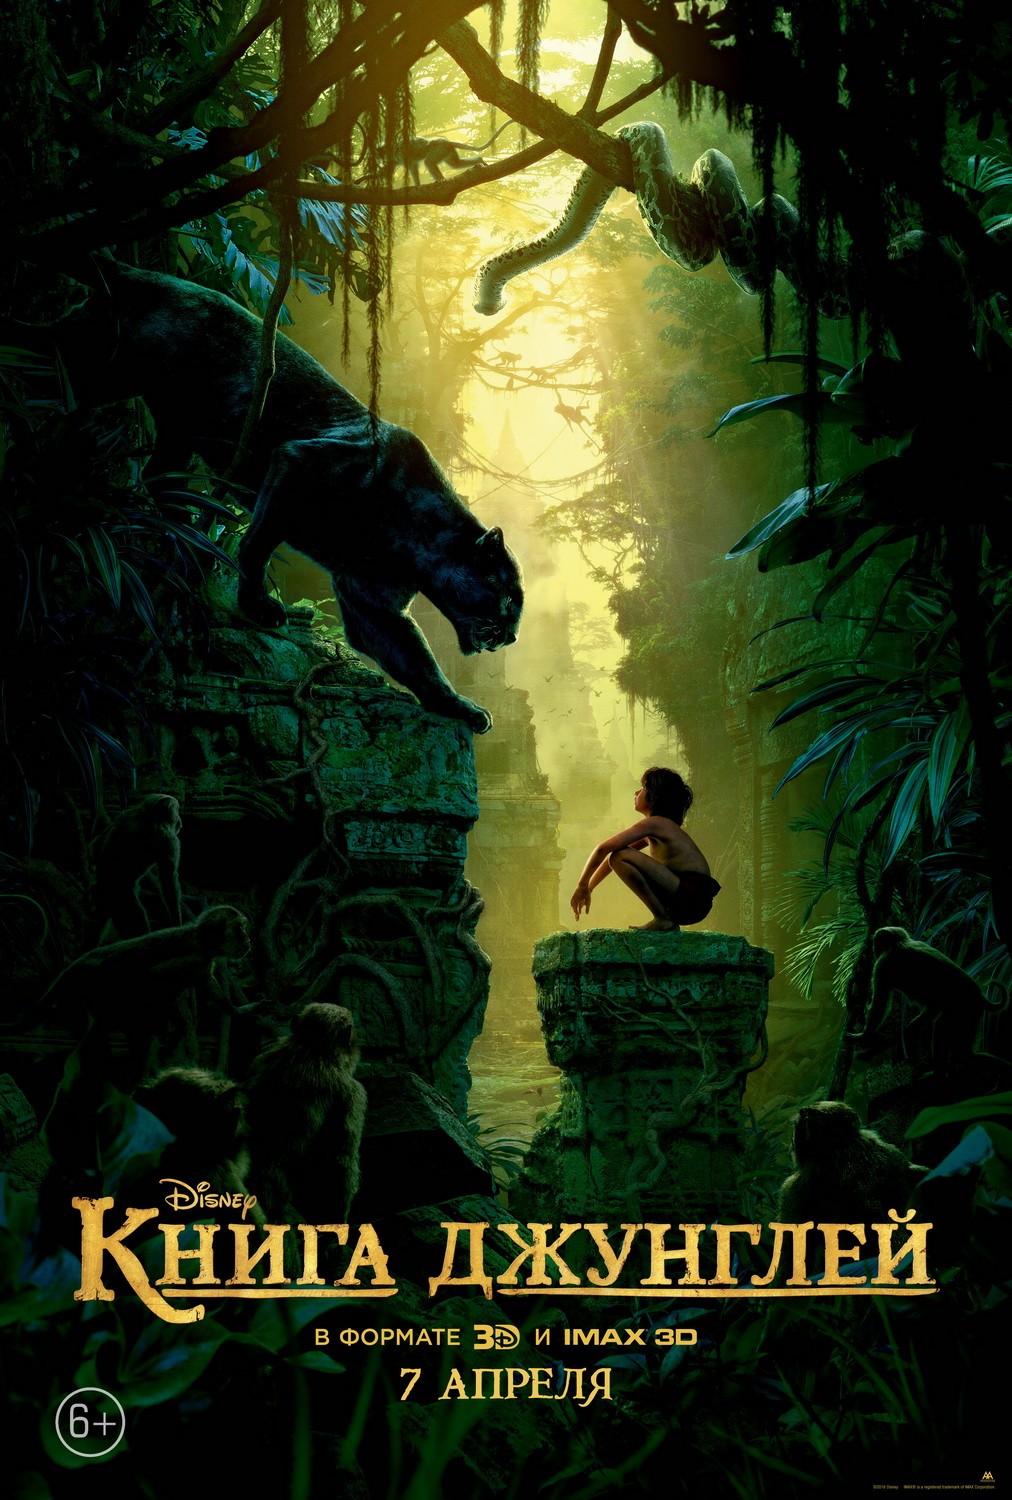 Книга джунглей: постер N119372